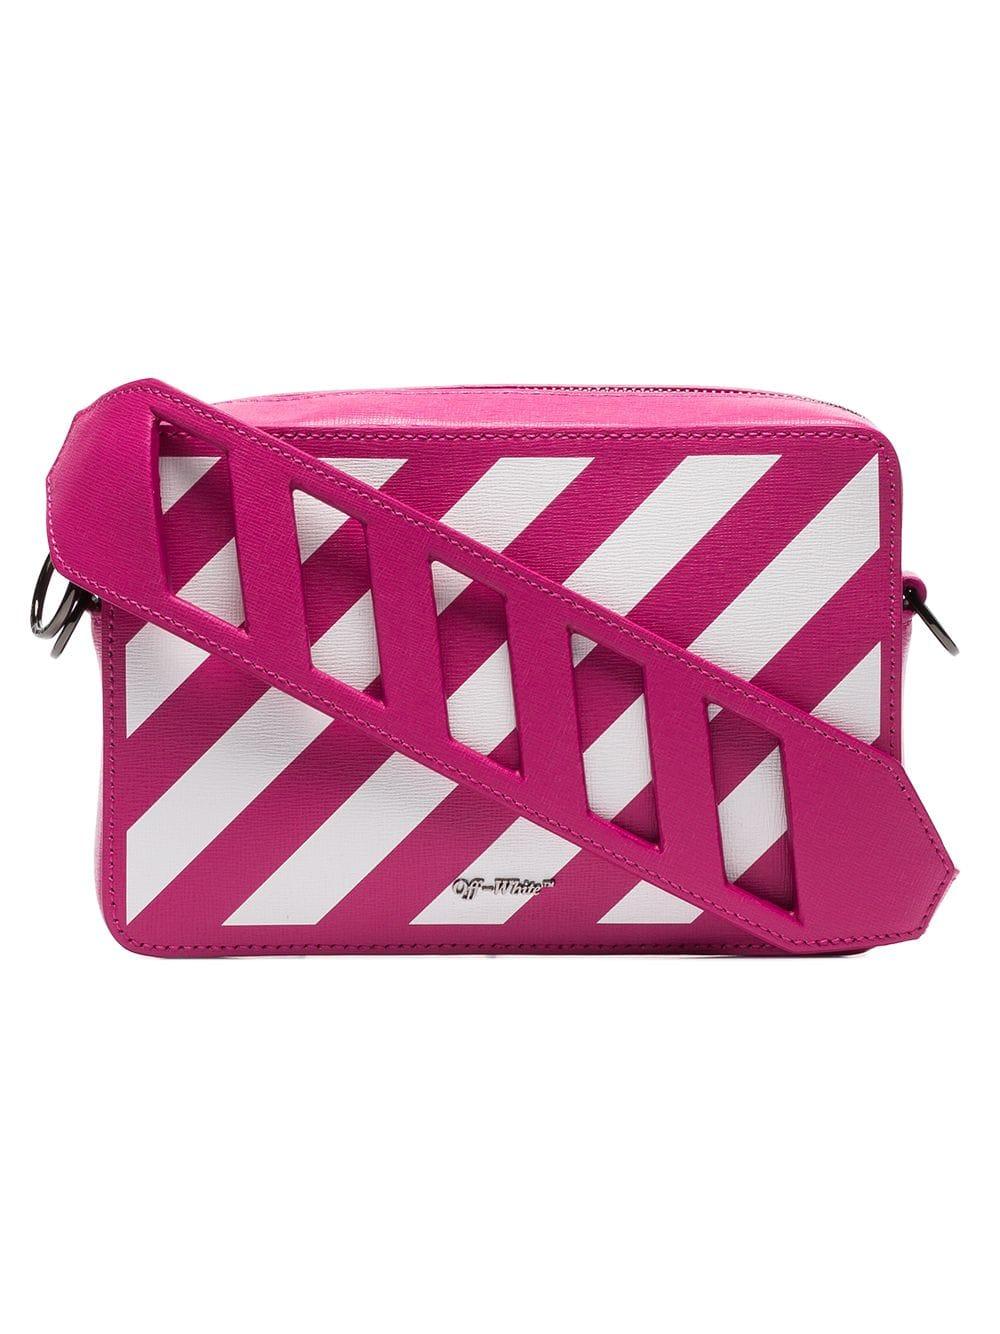 Off-White c/o Virgil Abloh Pink Leather Diagonal Striped Belt Bag | Lyst